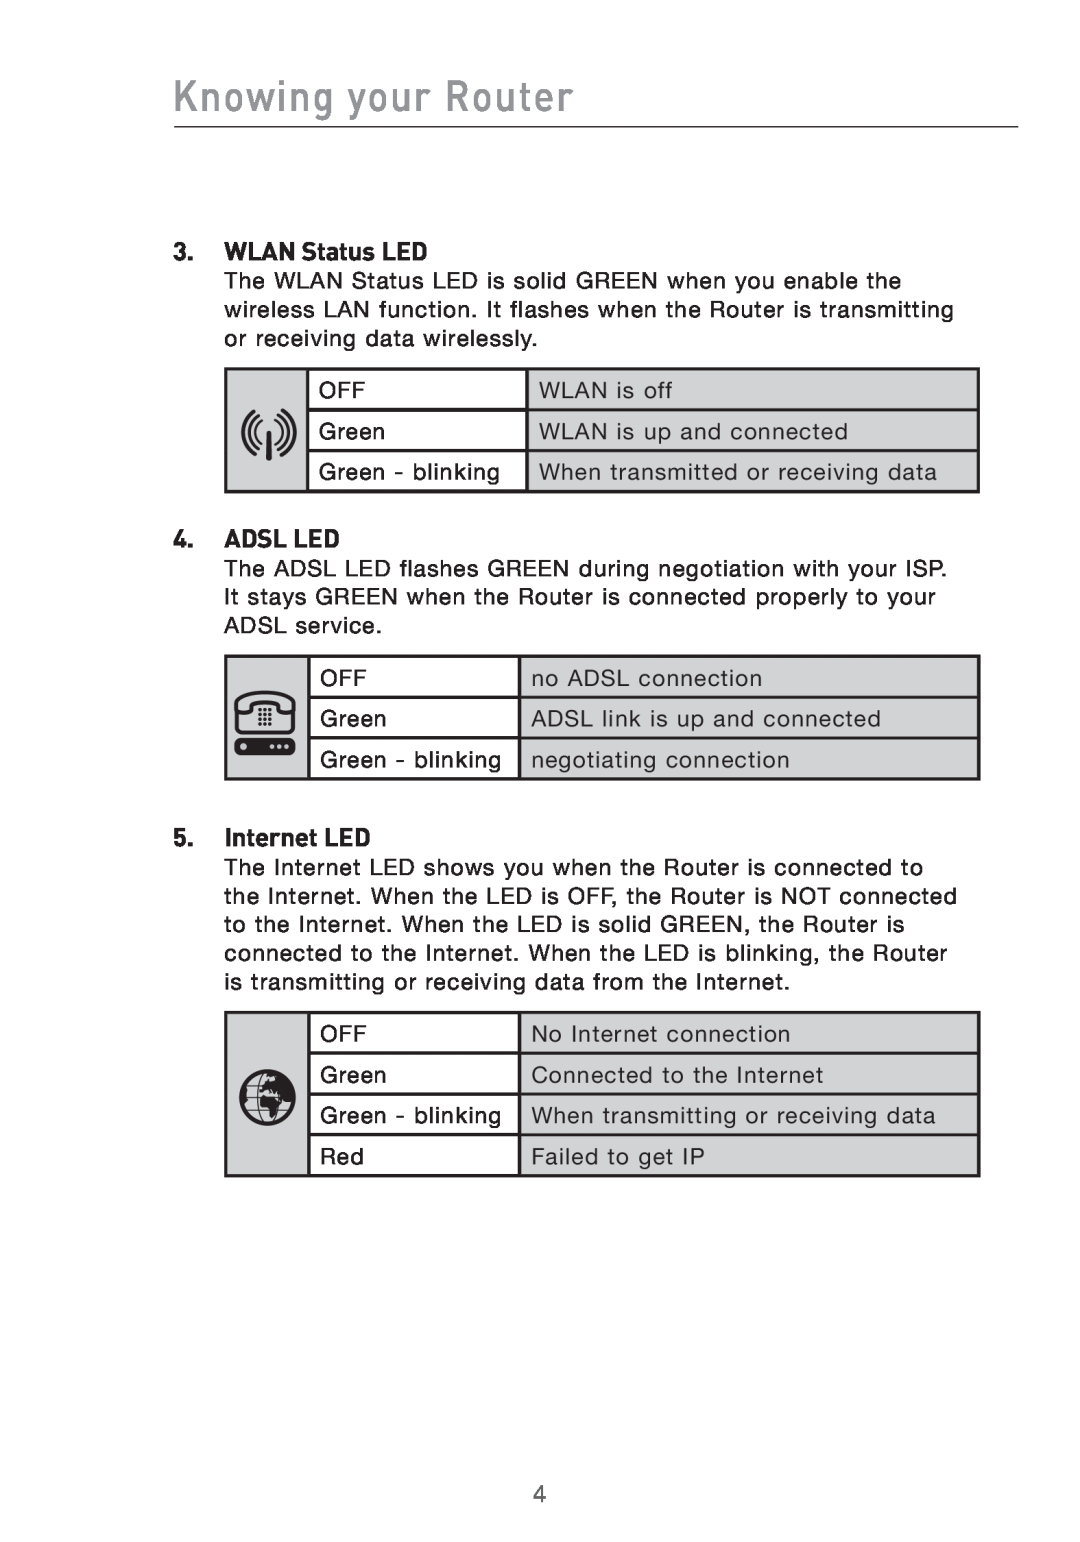 Belkin Pre-N manual Knowing your Router, WLAN Status LED, Adsl Led, Internet LED 